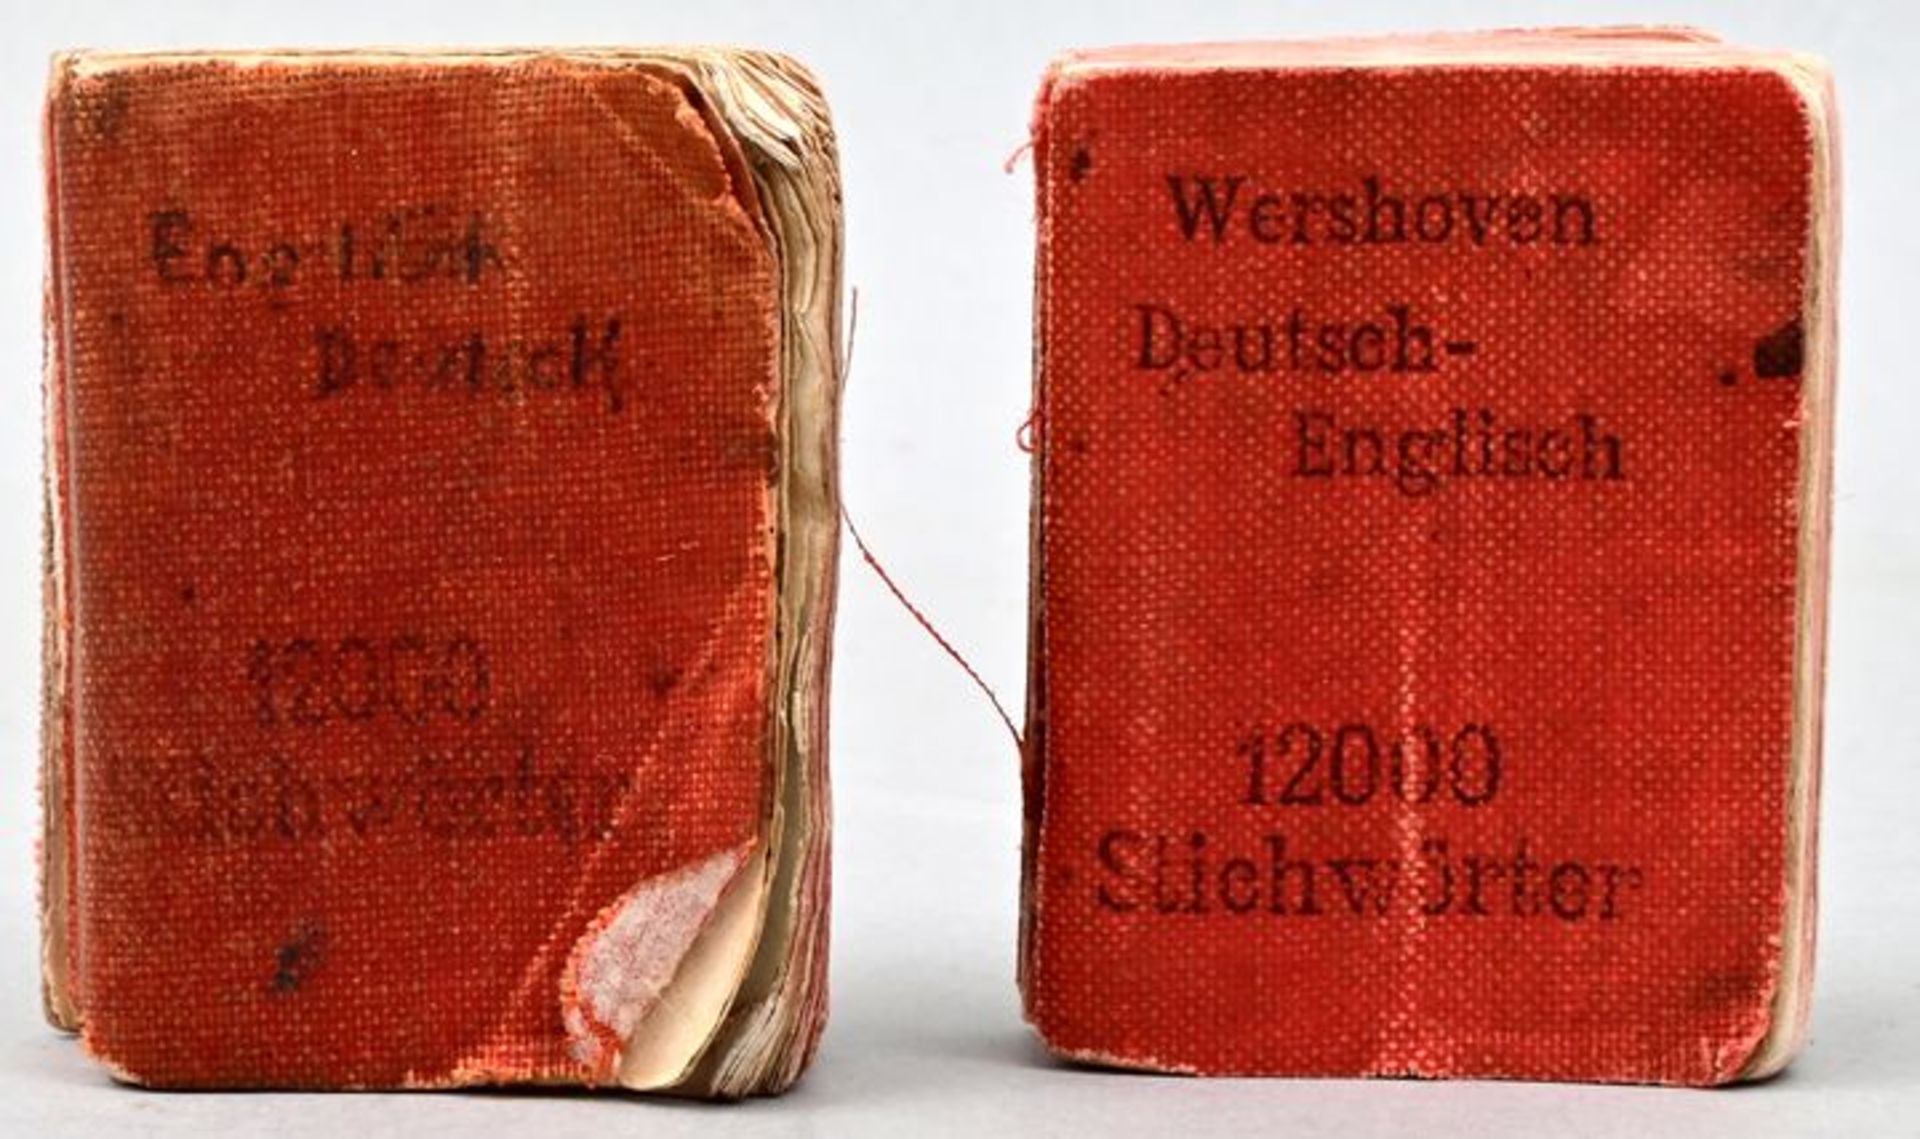 Paar Miniaturwörterbücher / Two dictionaries